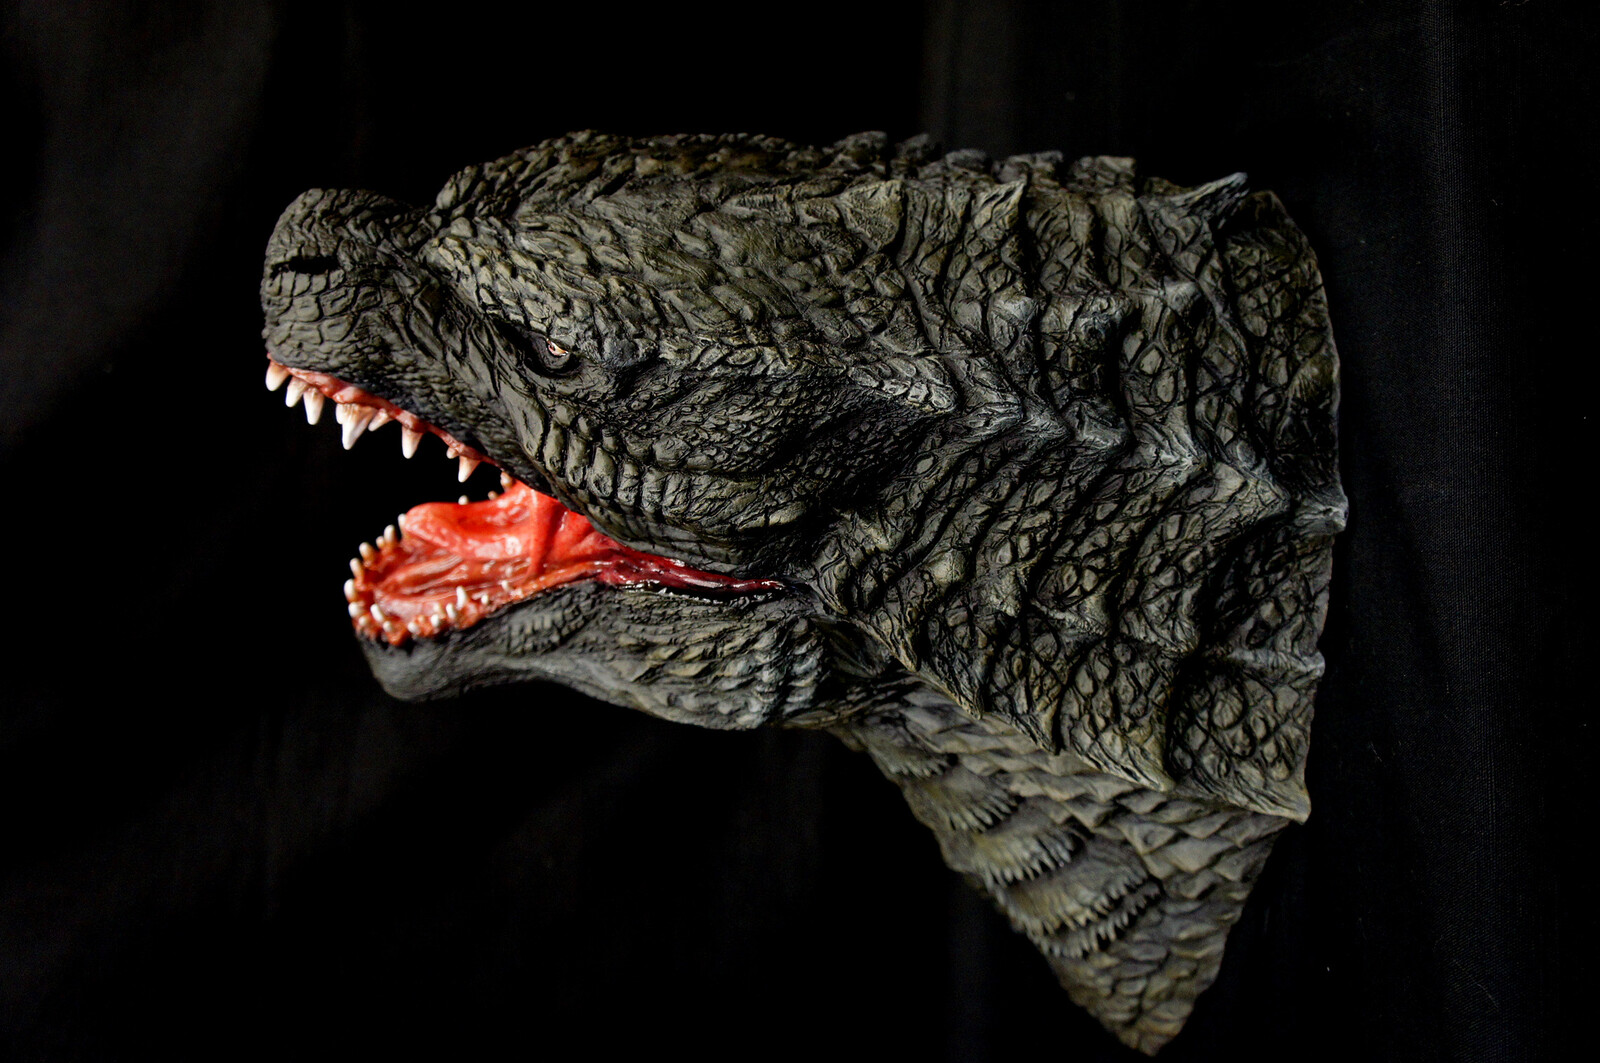 Godzilla 2014 Head Studio Scale Wall-Hanger 
https://www.solidart.club/